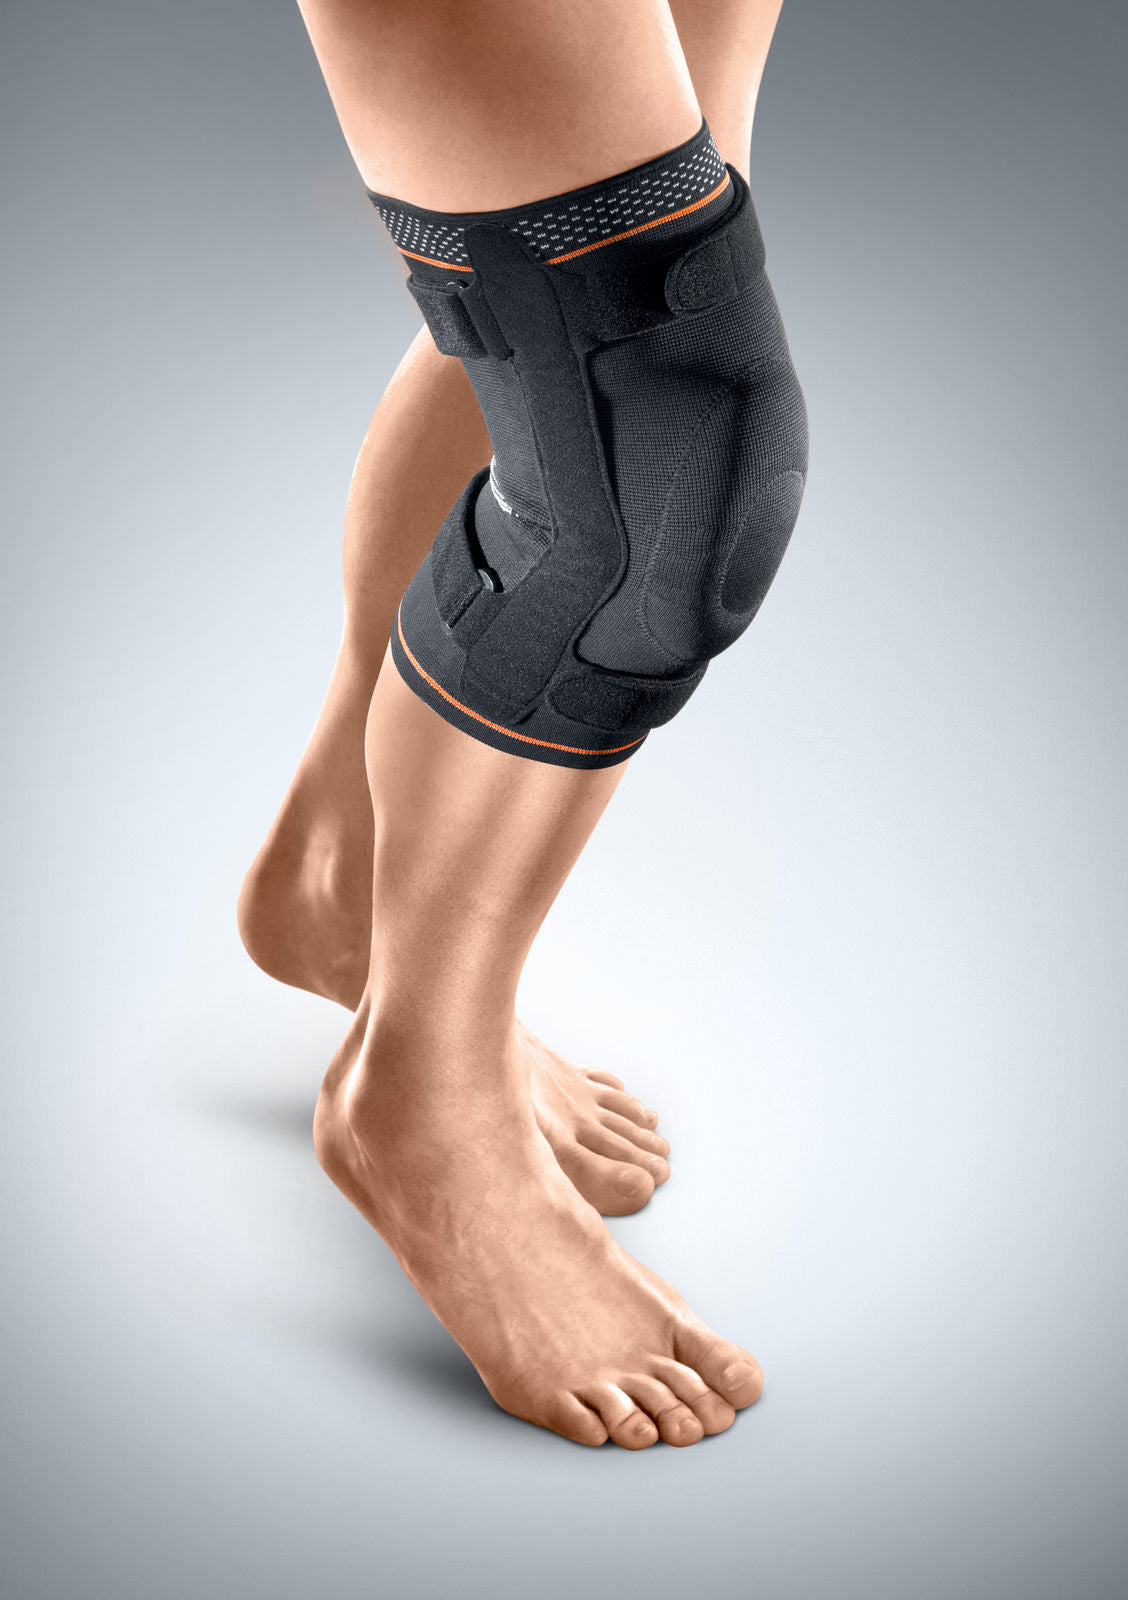 MYPOWR. Genouillères Powerlifting - Brace - Bandages de genoux - Crossfit -  Genouillères